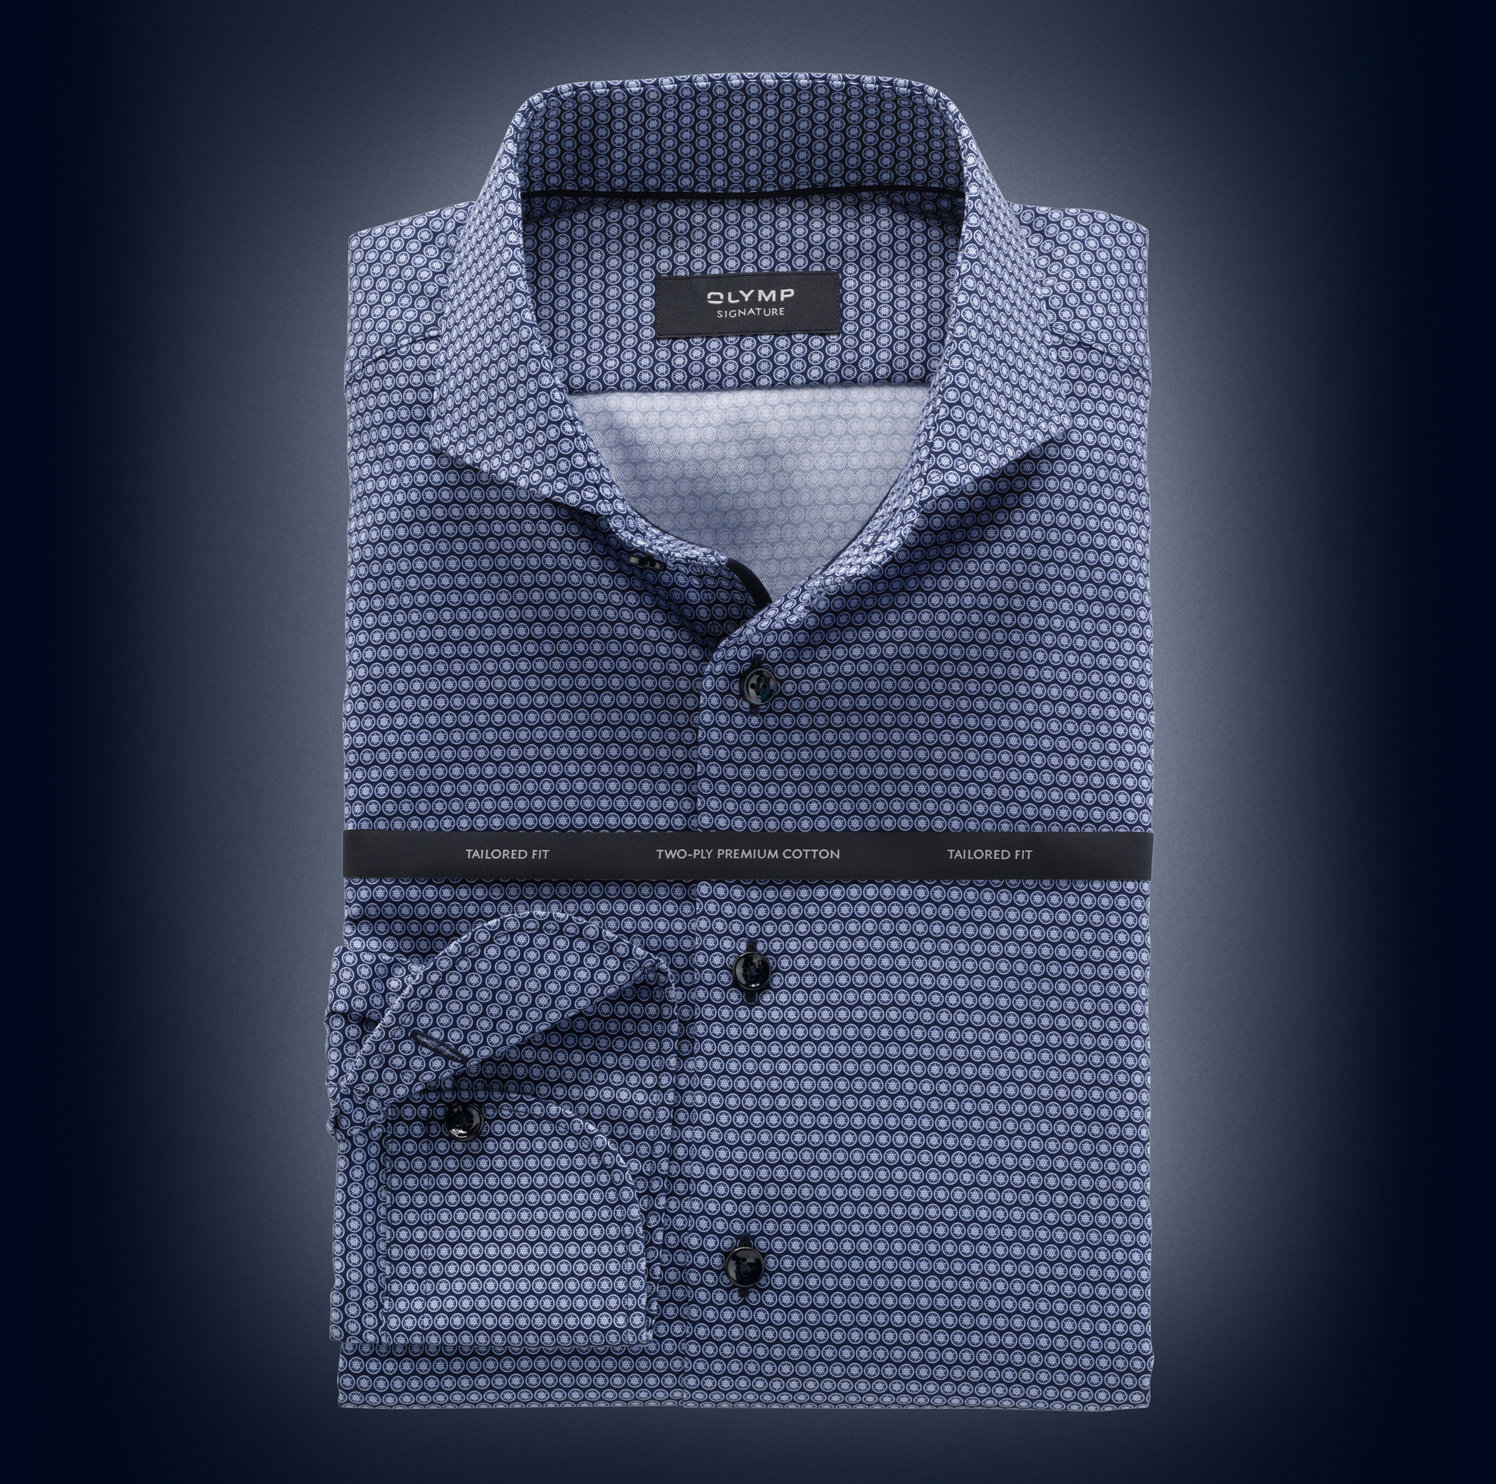 Business shirt | OLYMP SIGNATURE, tailored fit, SIGNATURE Kent ...